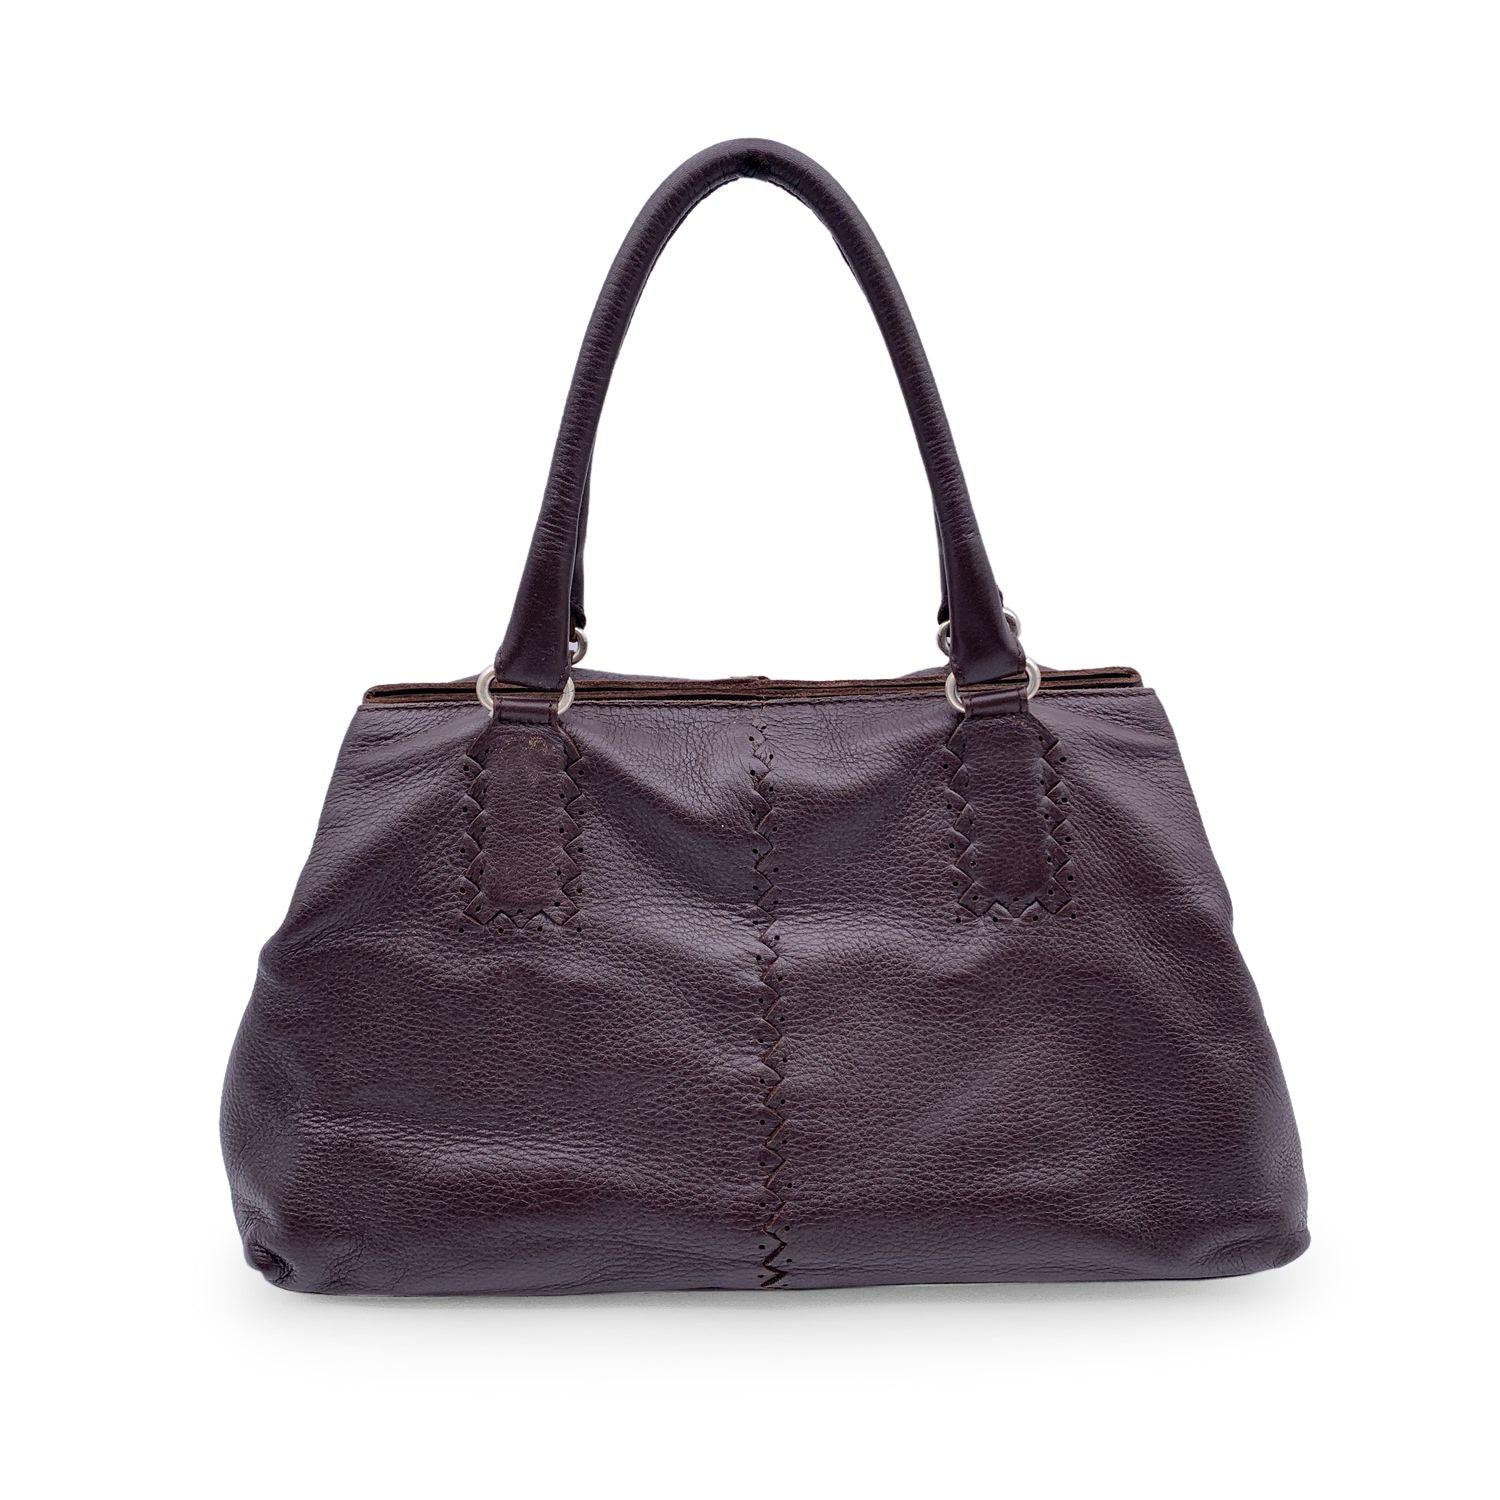 Bottega Veneta Brown Leather Intrecciato Detail Tote Bag Handbag In Excellent Condition For Sale In Rome, Rome